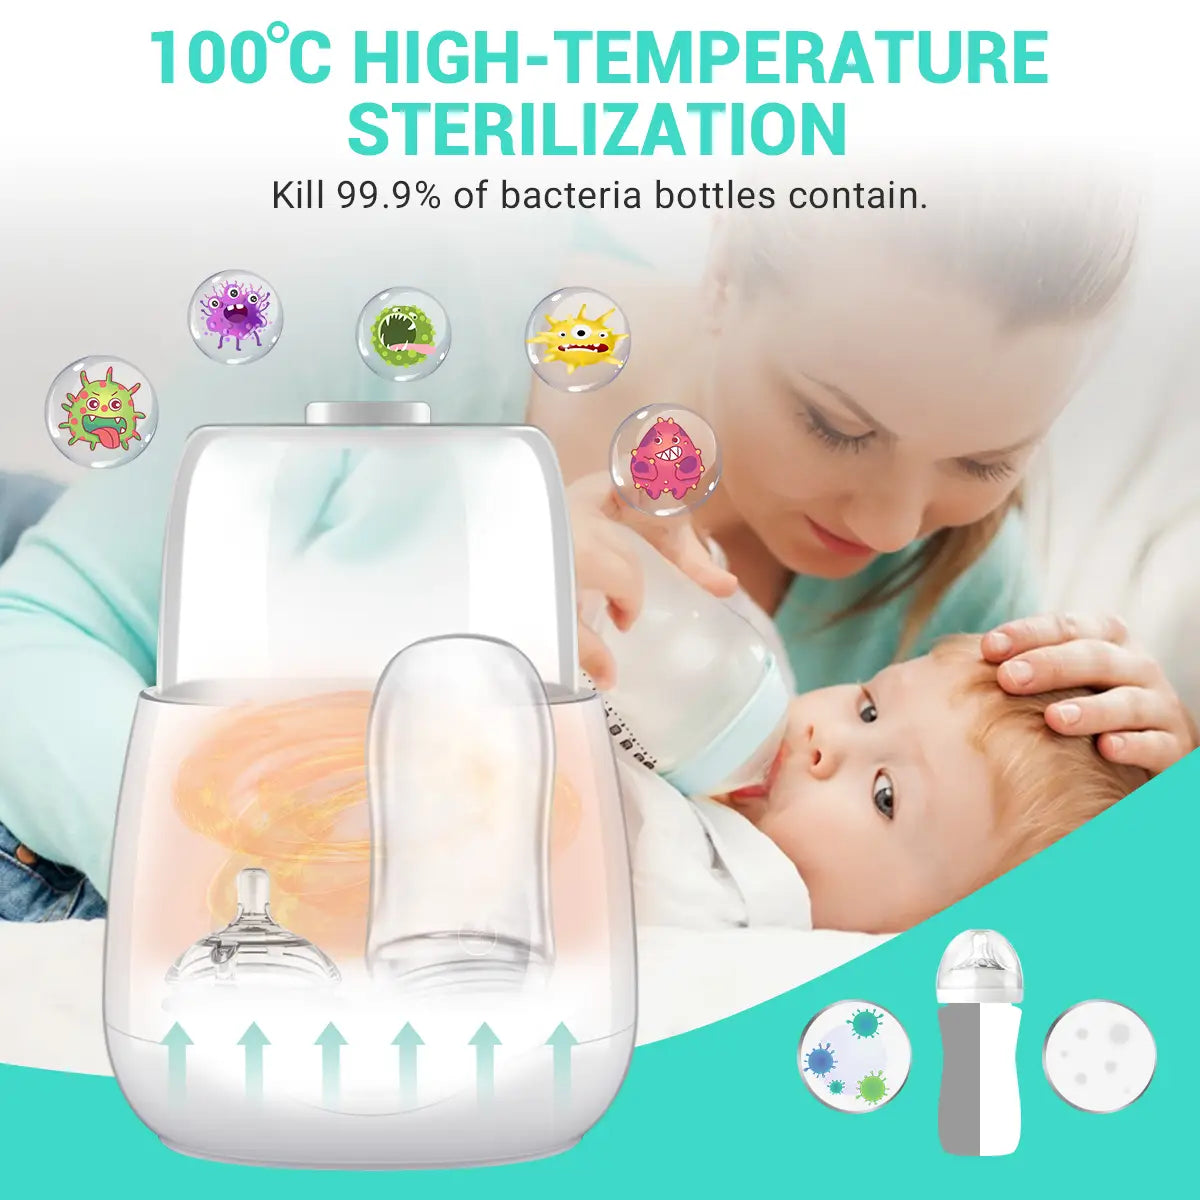 Bioby Baby Bottle Warmer, Eivotor Steam 6-in-1 Double Food